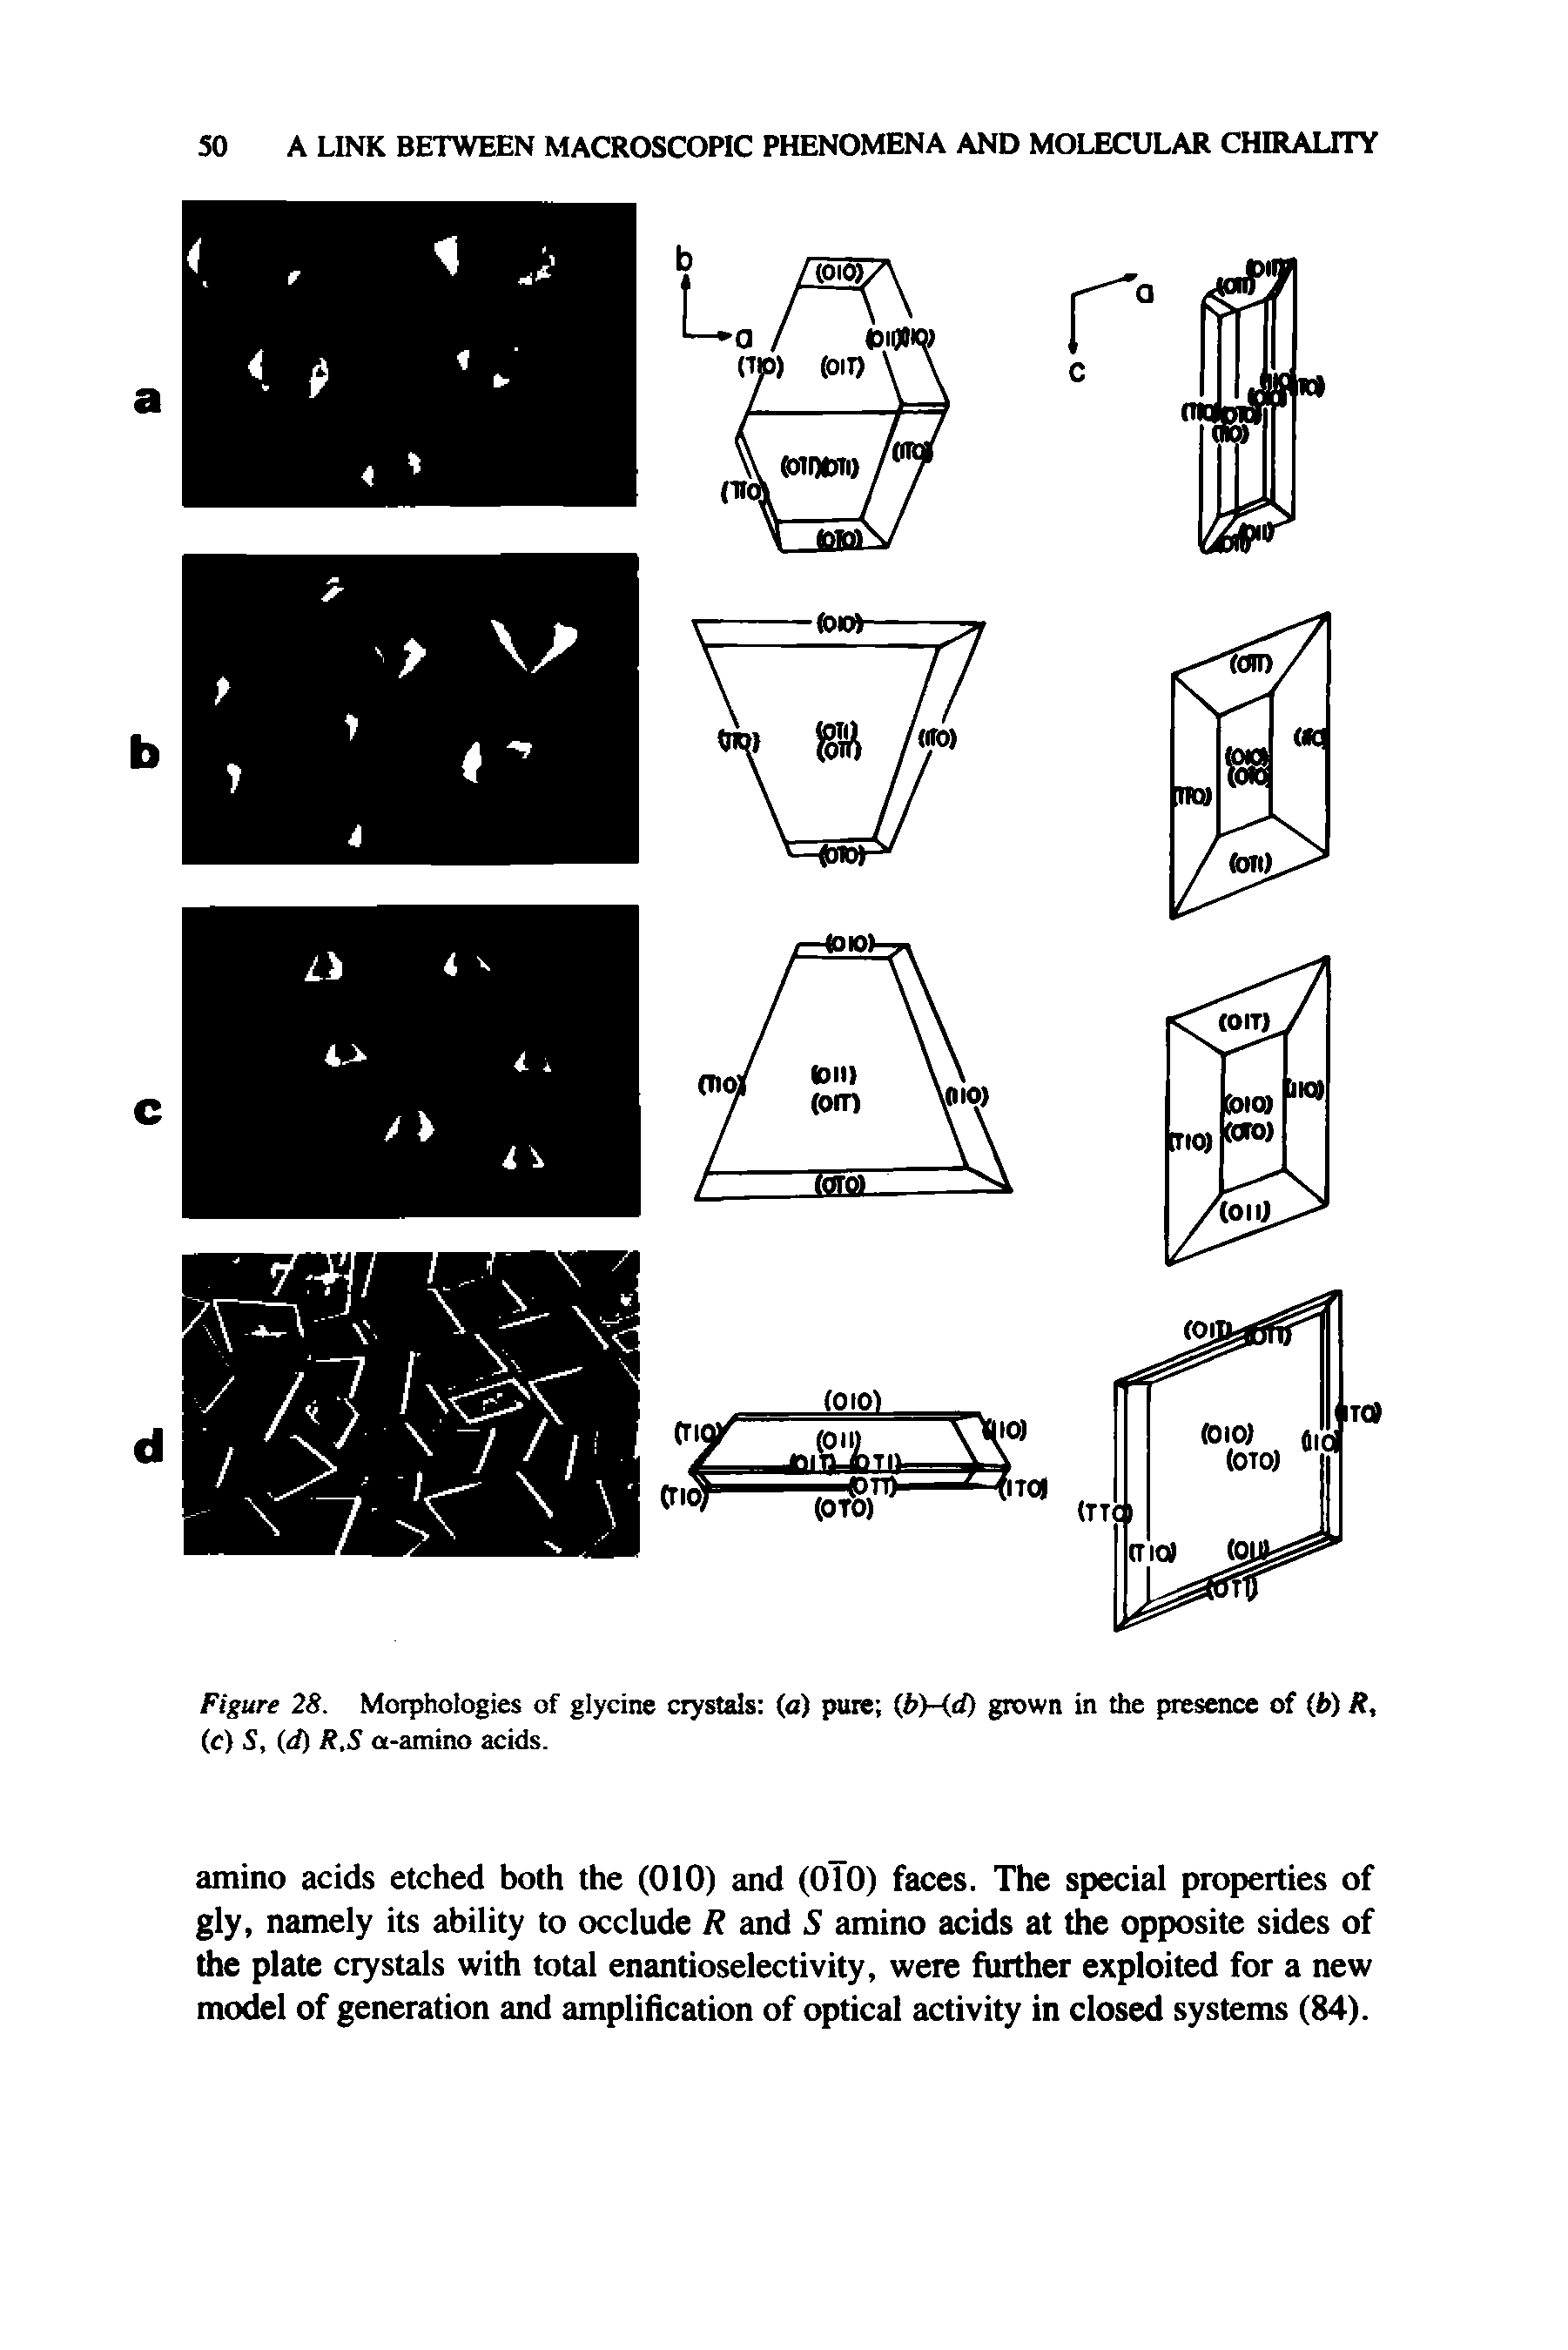 Figure 28. Morphologies of glycine crystals (a) pure (b)-(d) grown in the presence of (I>) R, (c) S, (d) R.S a-amino acids.